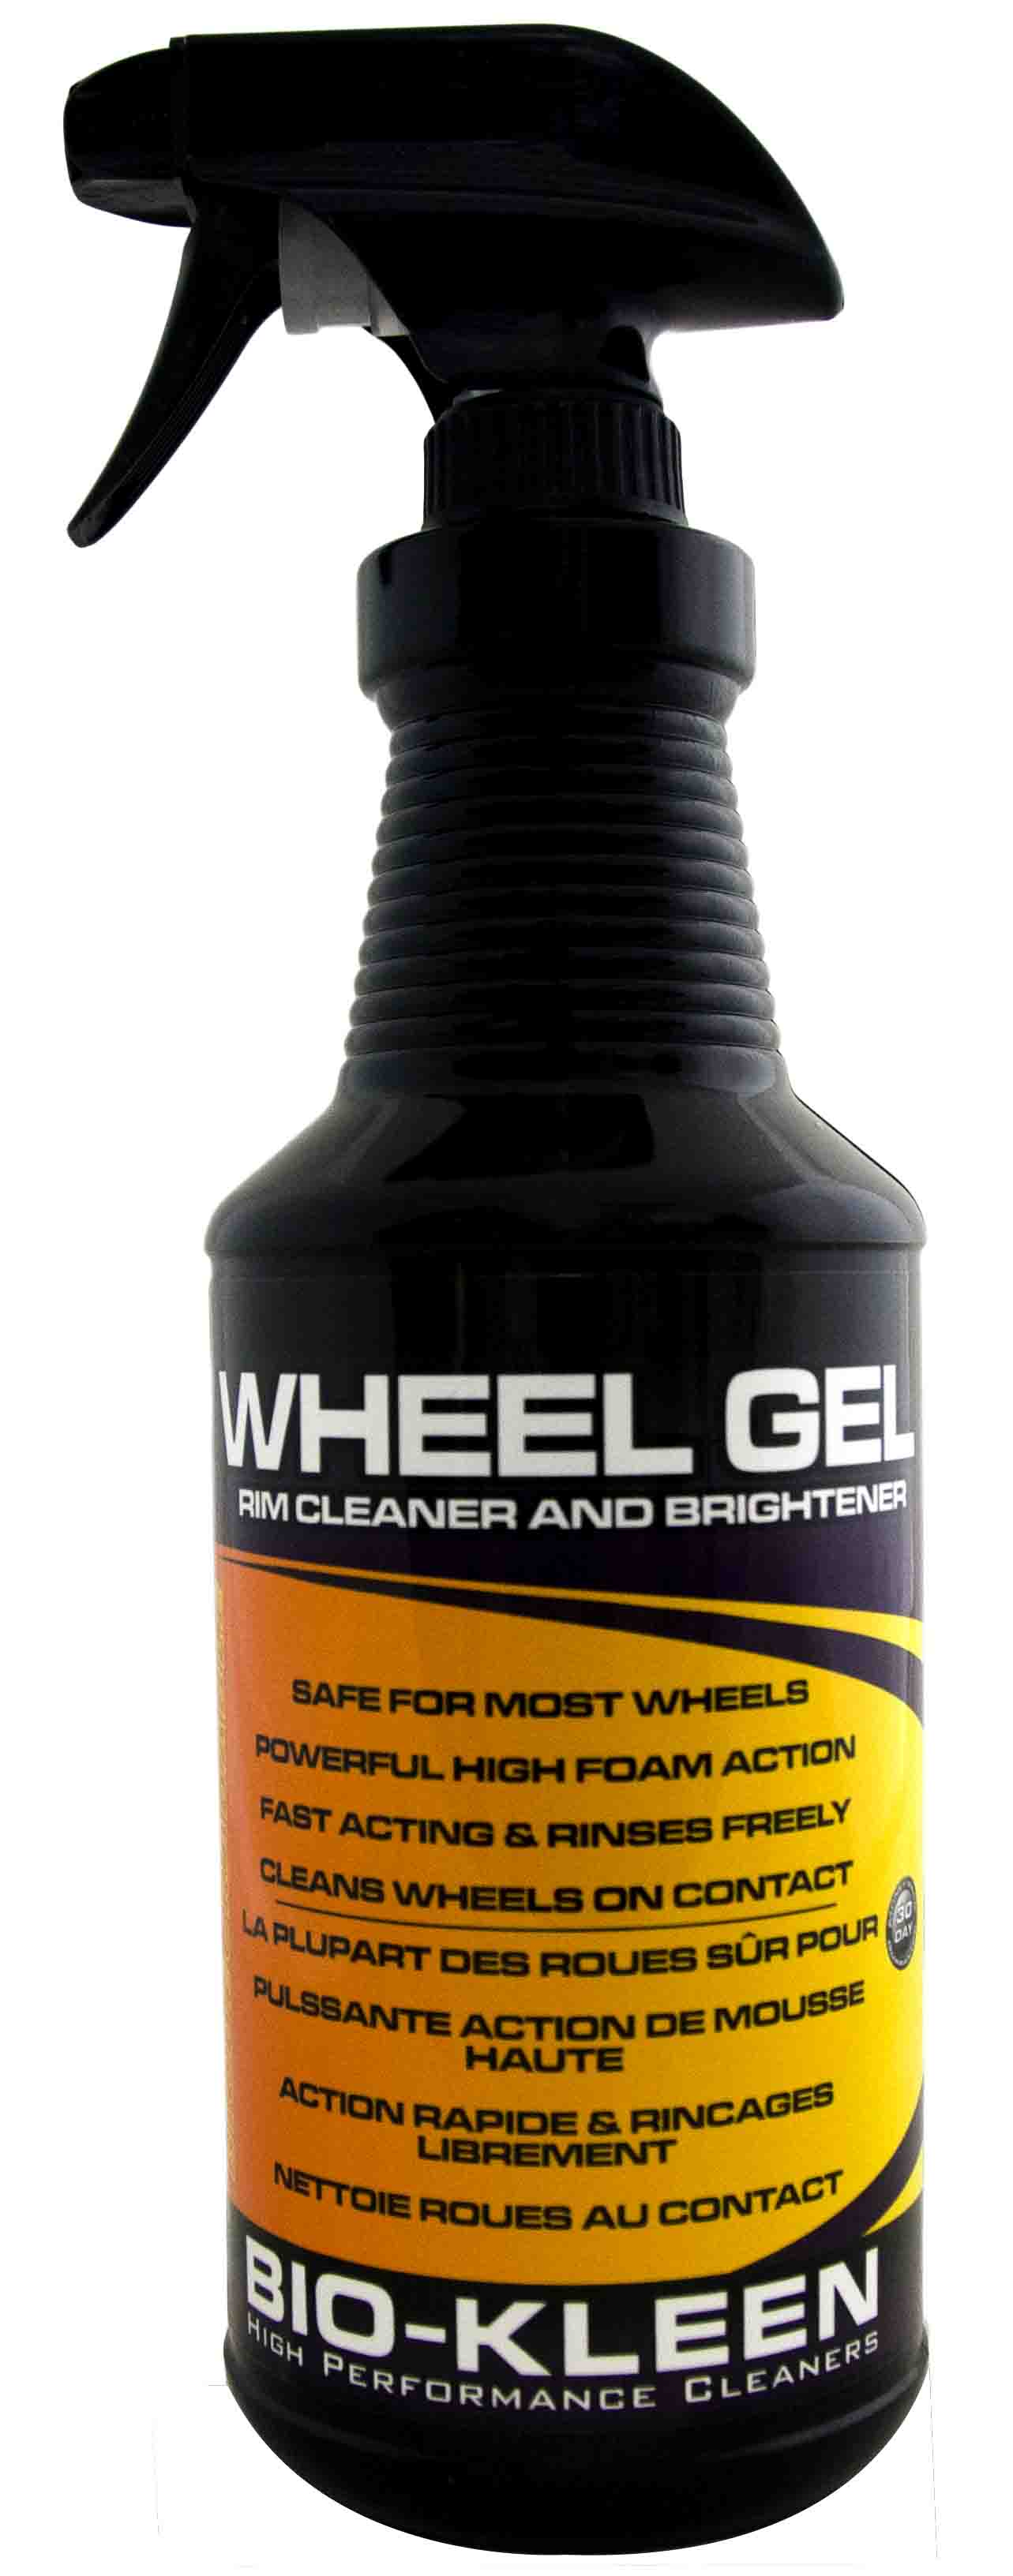 Wheel Cleaner and Brightener